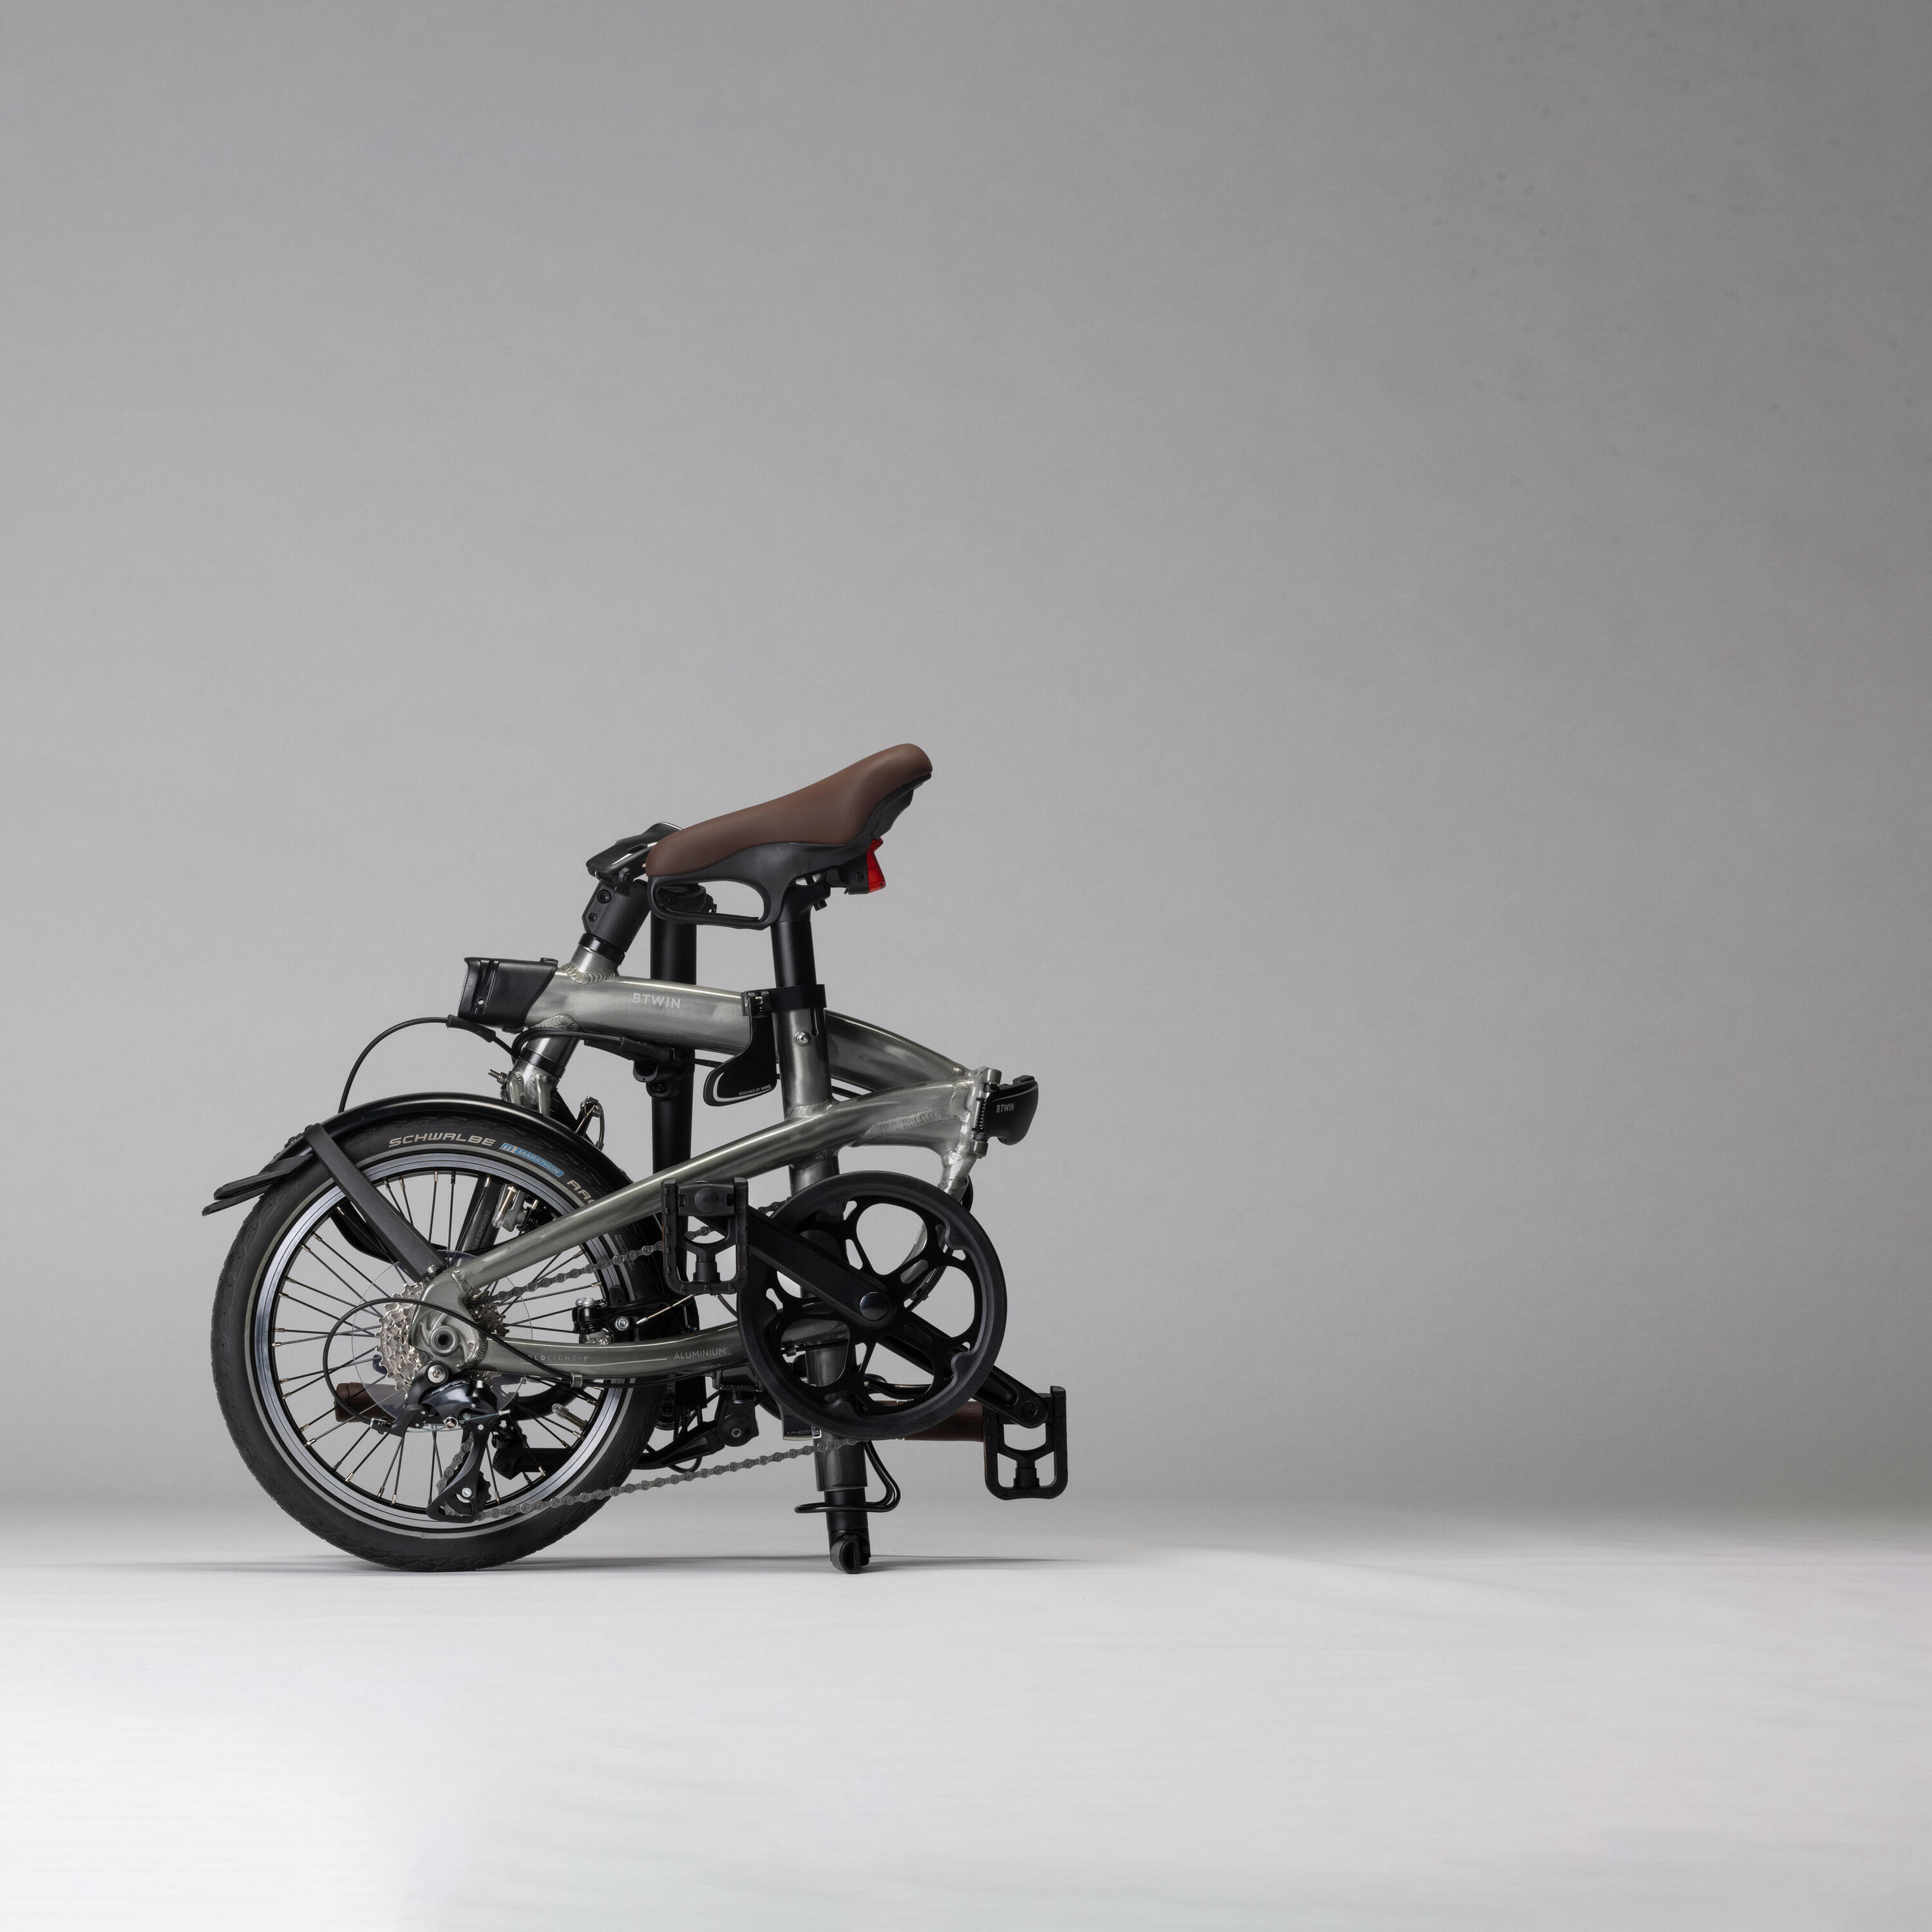 16-inch ultra-compact 1-second lightweight folding bike, grey 4/30